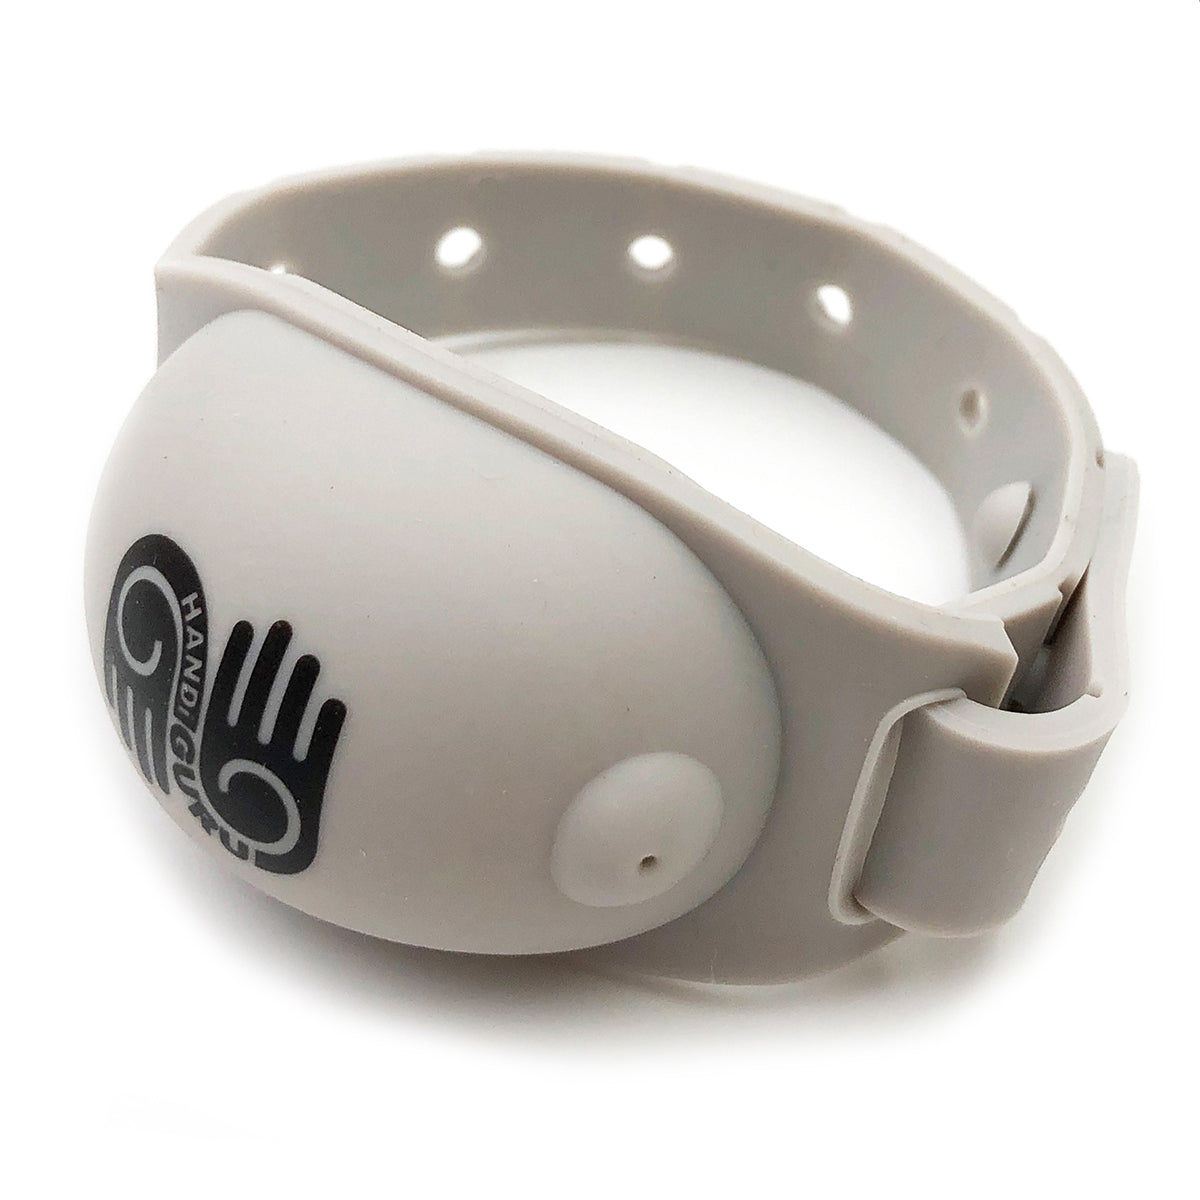 HandiGuru Refillable Sanitizer Wristband Bracelet - Guru Gray